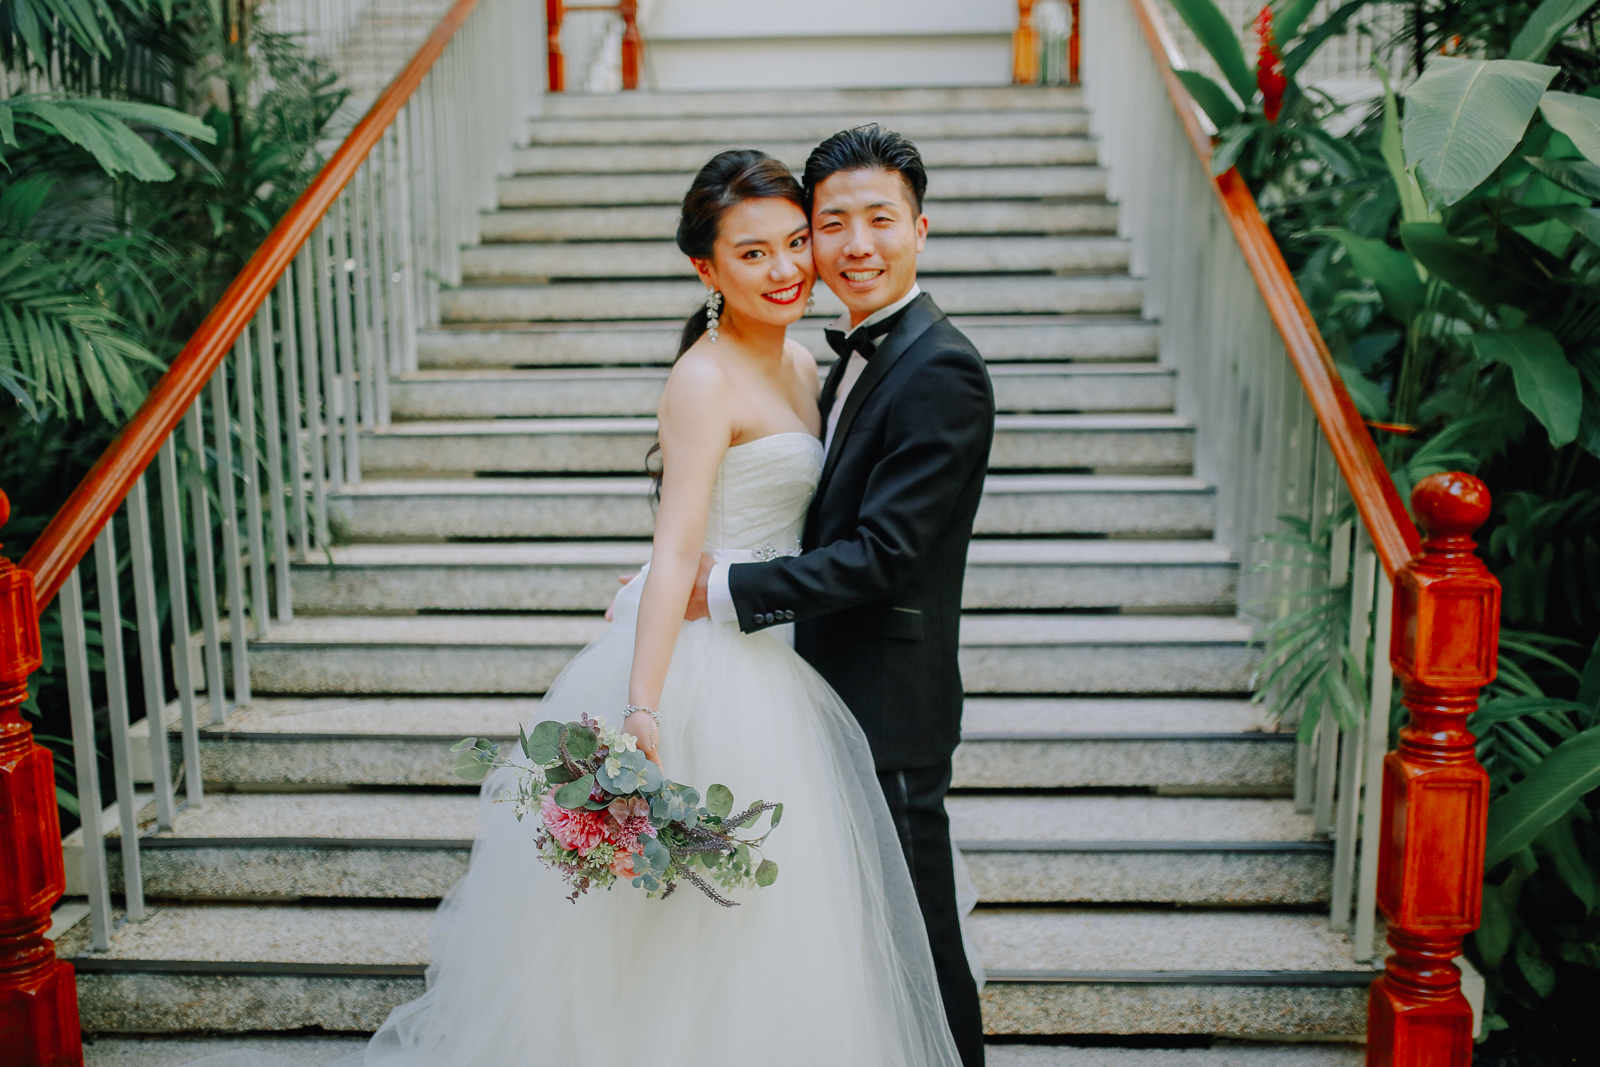 ctp 5 4 - Shojiro & Hiroko's Shangrila Mactan Cebu Intimate Wedding